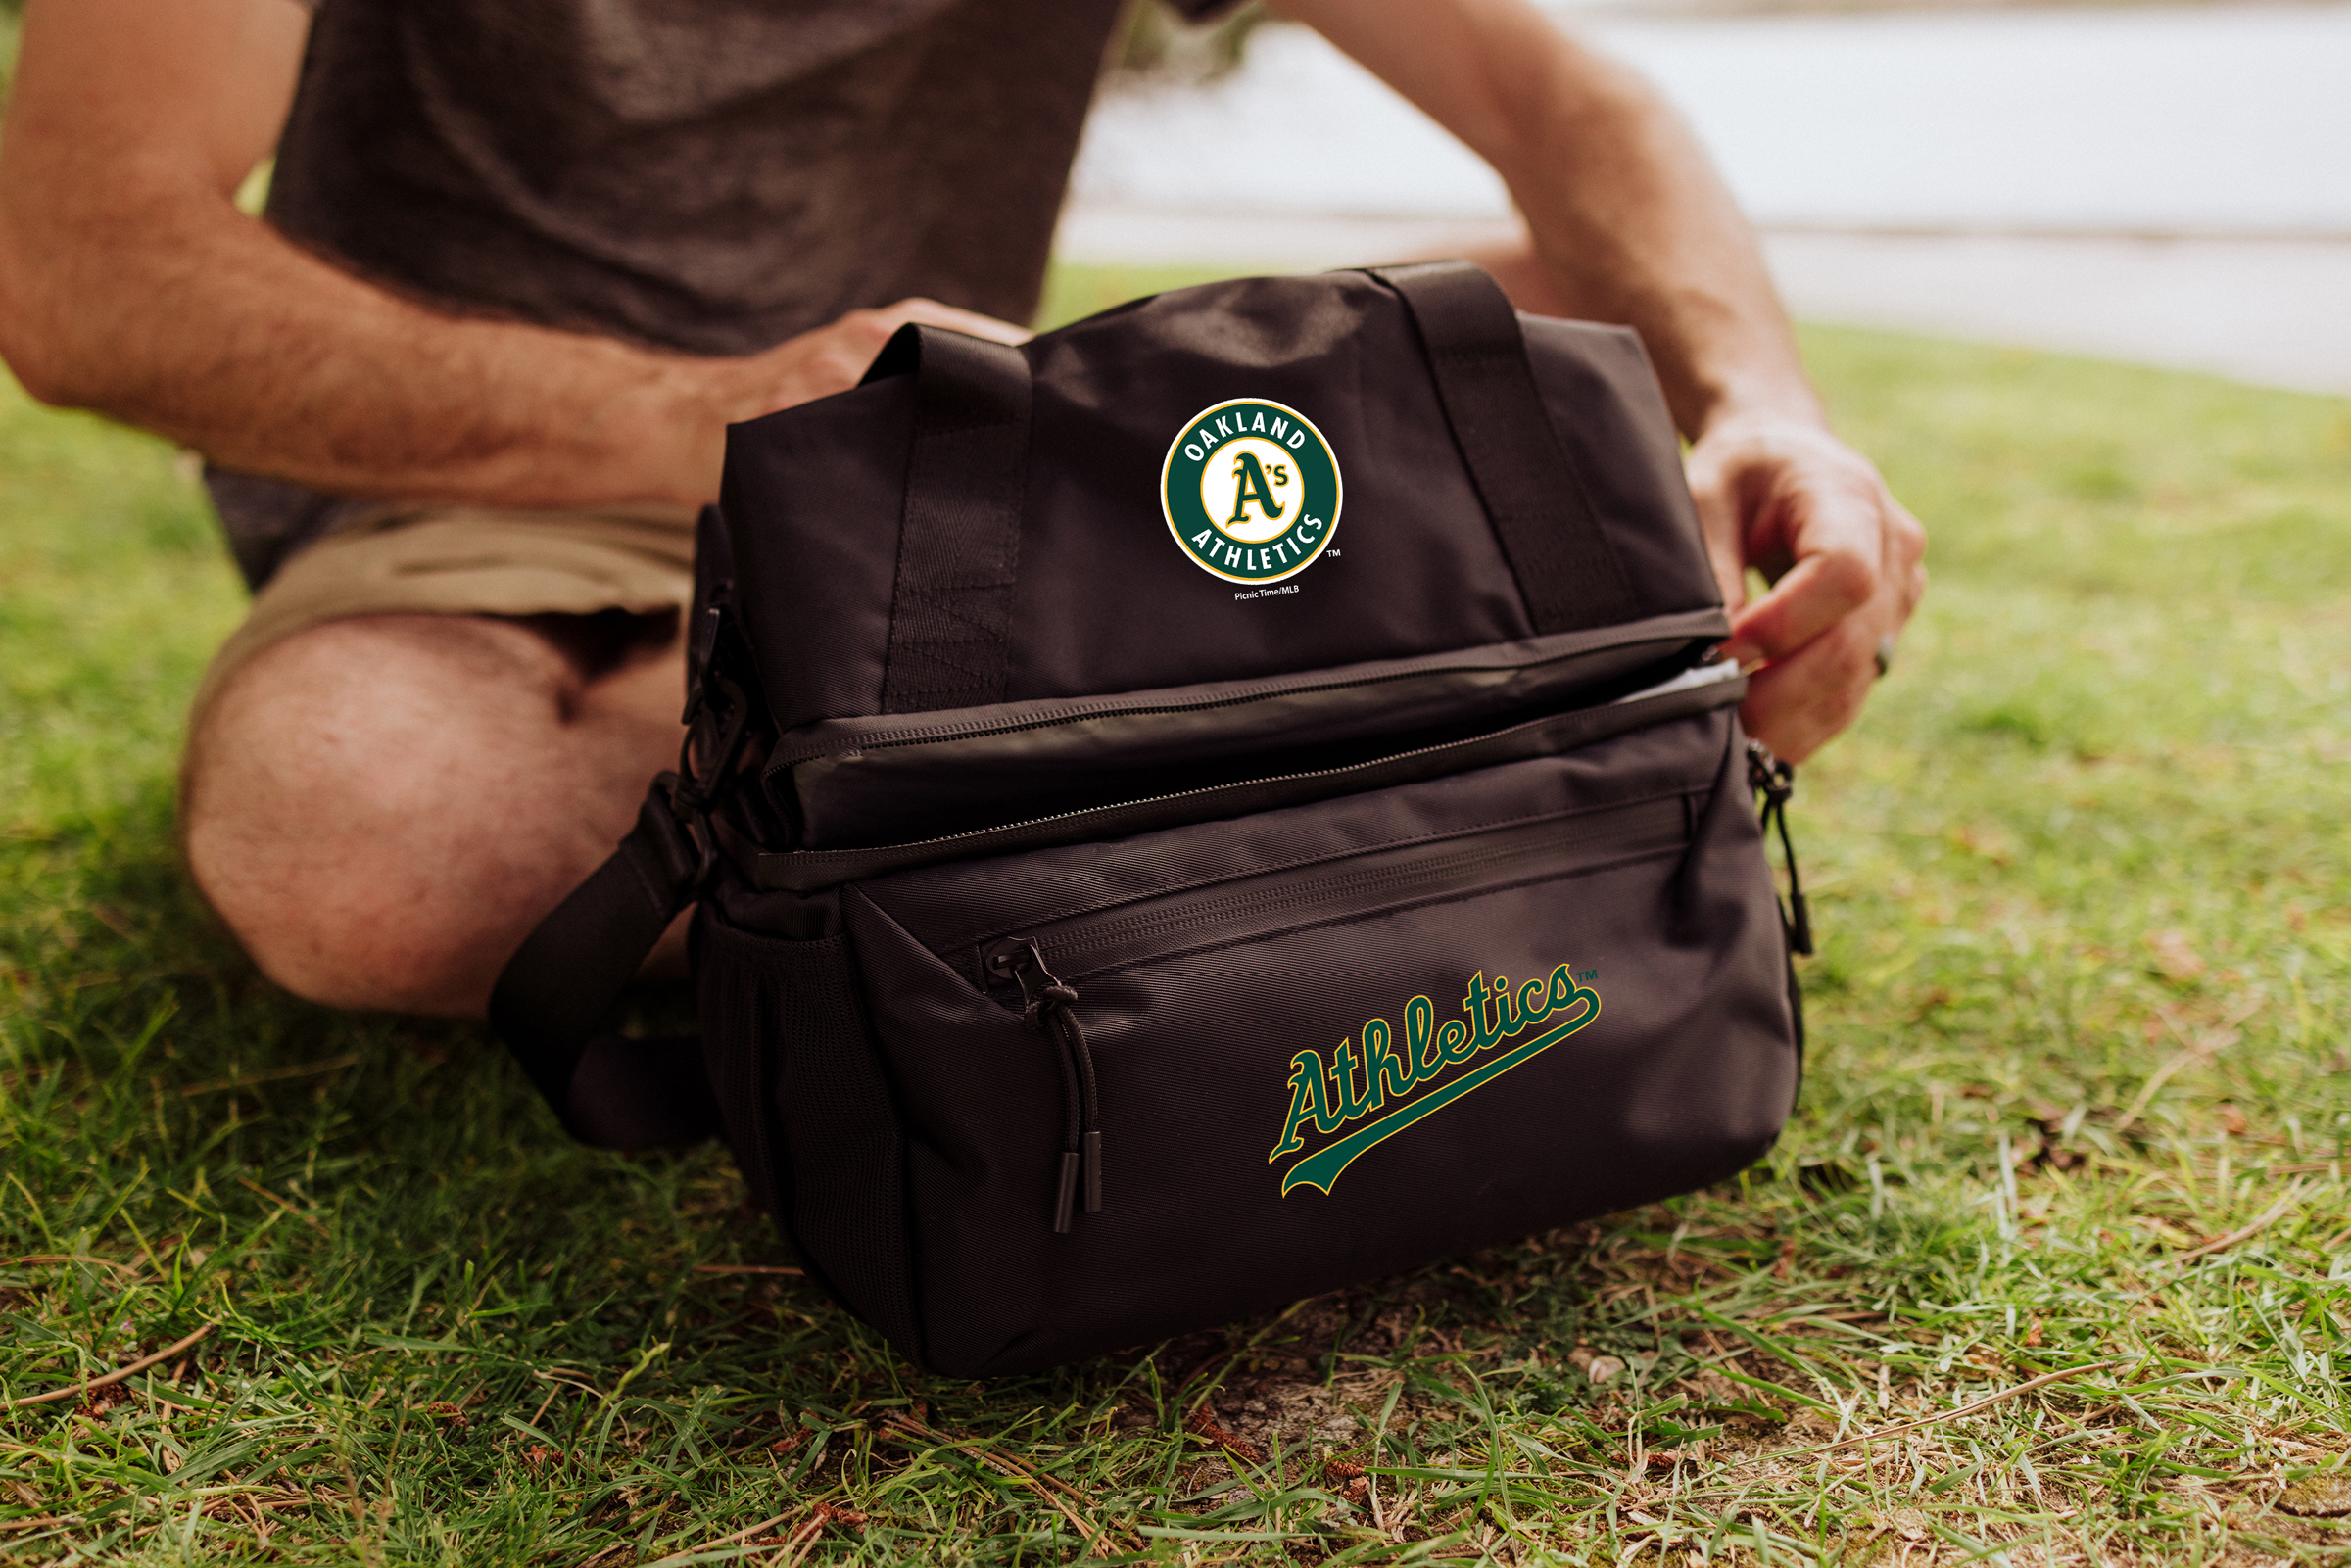 Oakland Athletics - Tarana Lunch Bag Cooler with Utensils